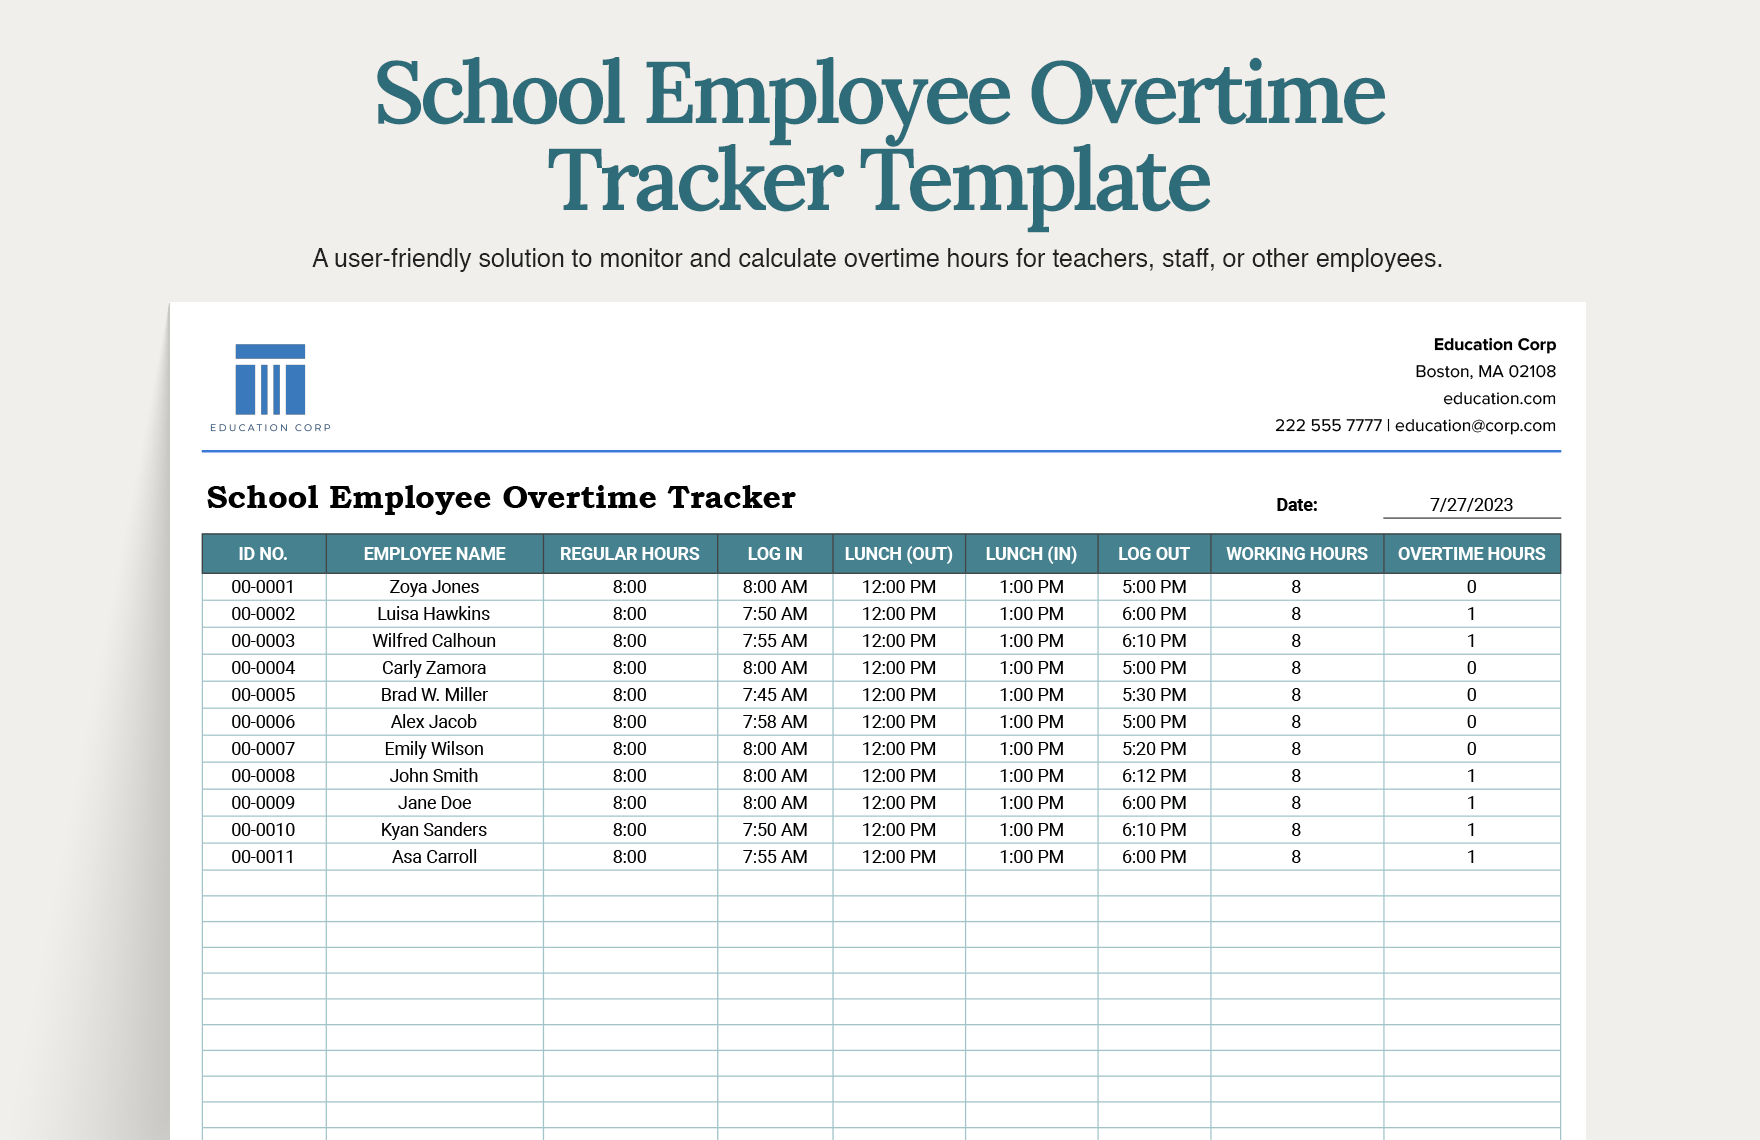 School Employee Overtime Tracker Template